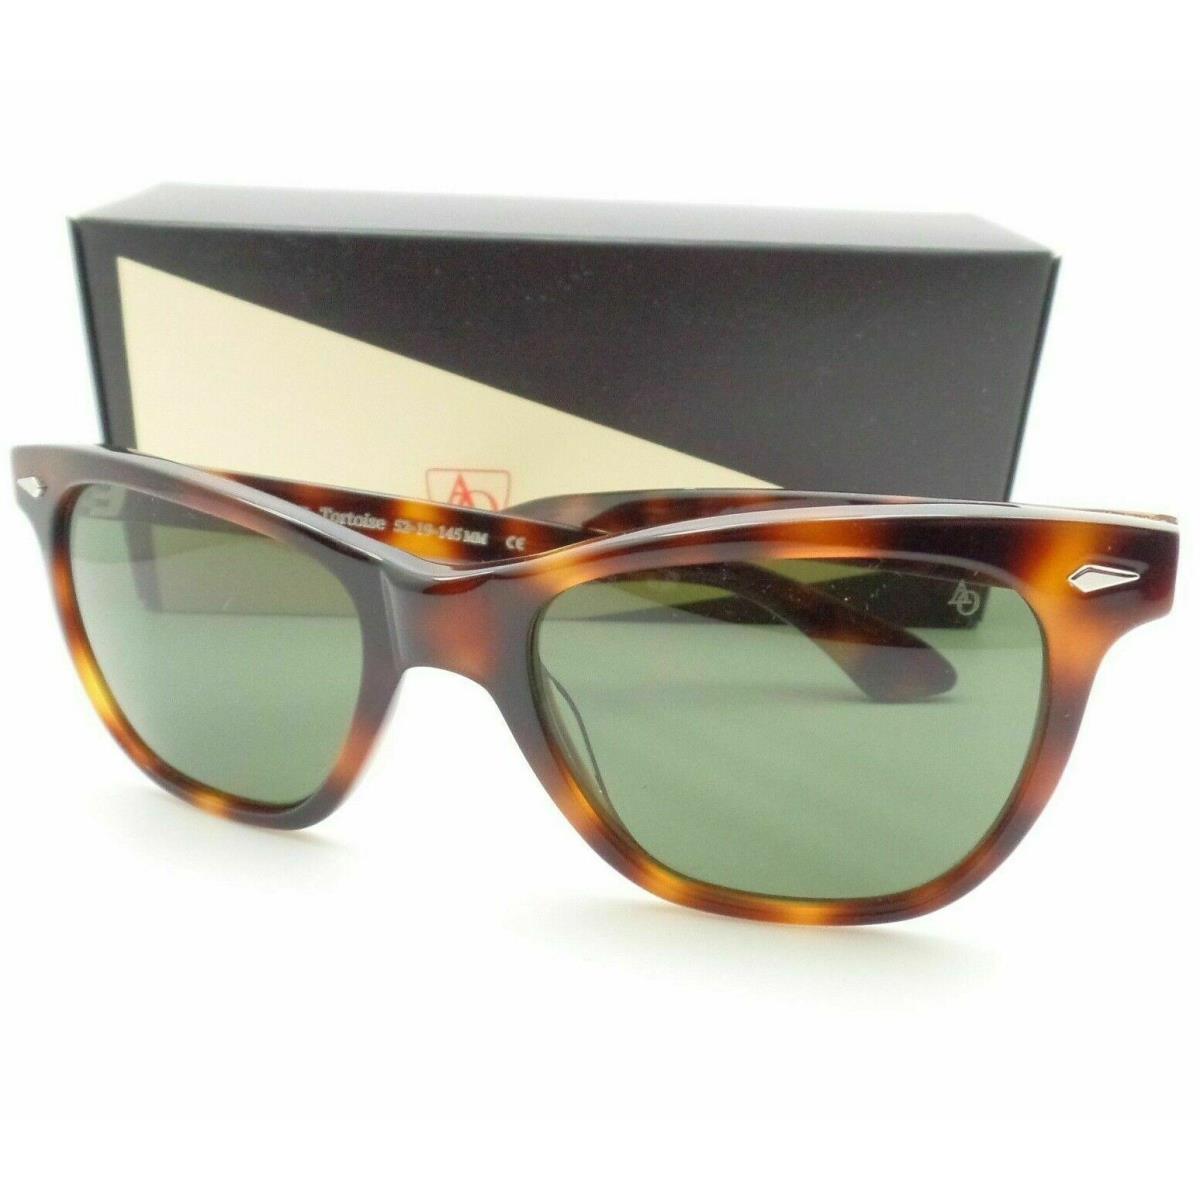 AO American Optical Saratoga Tortoise Green Sunglasses